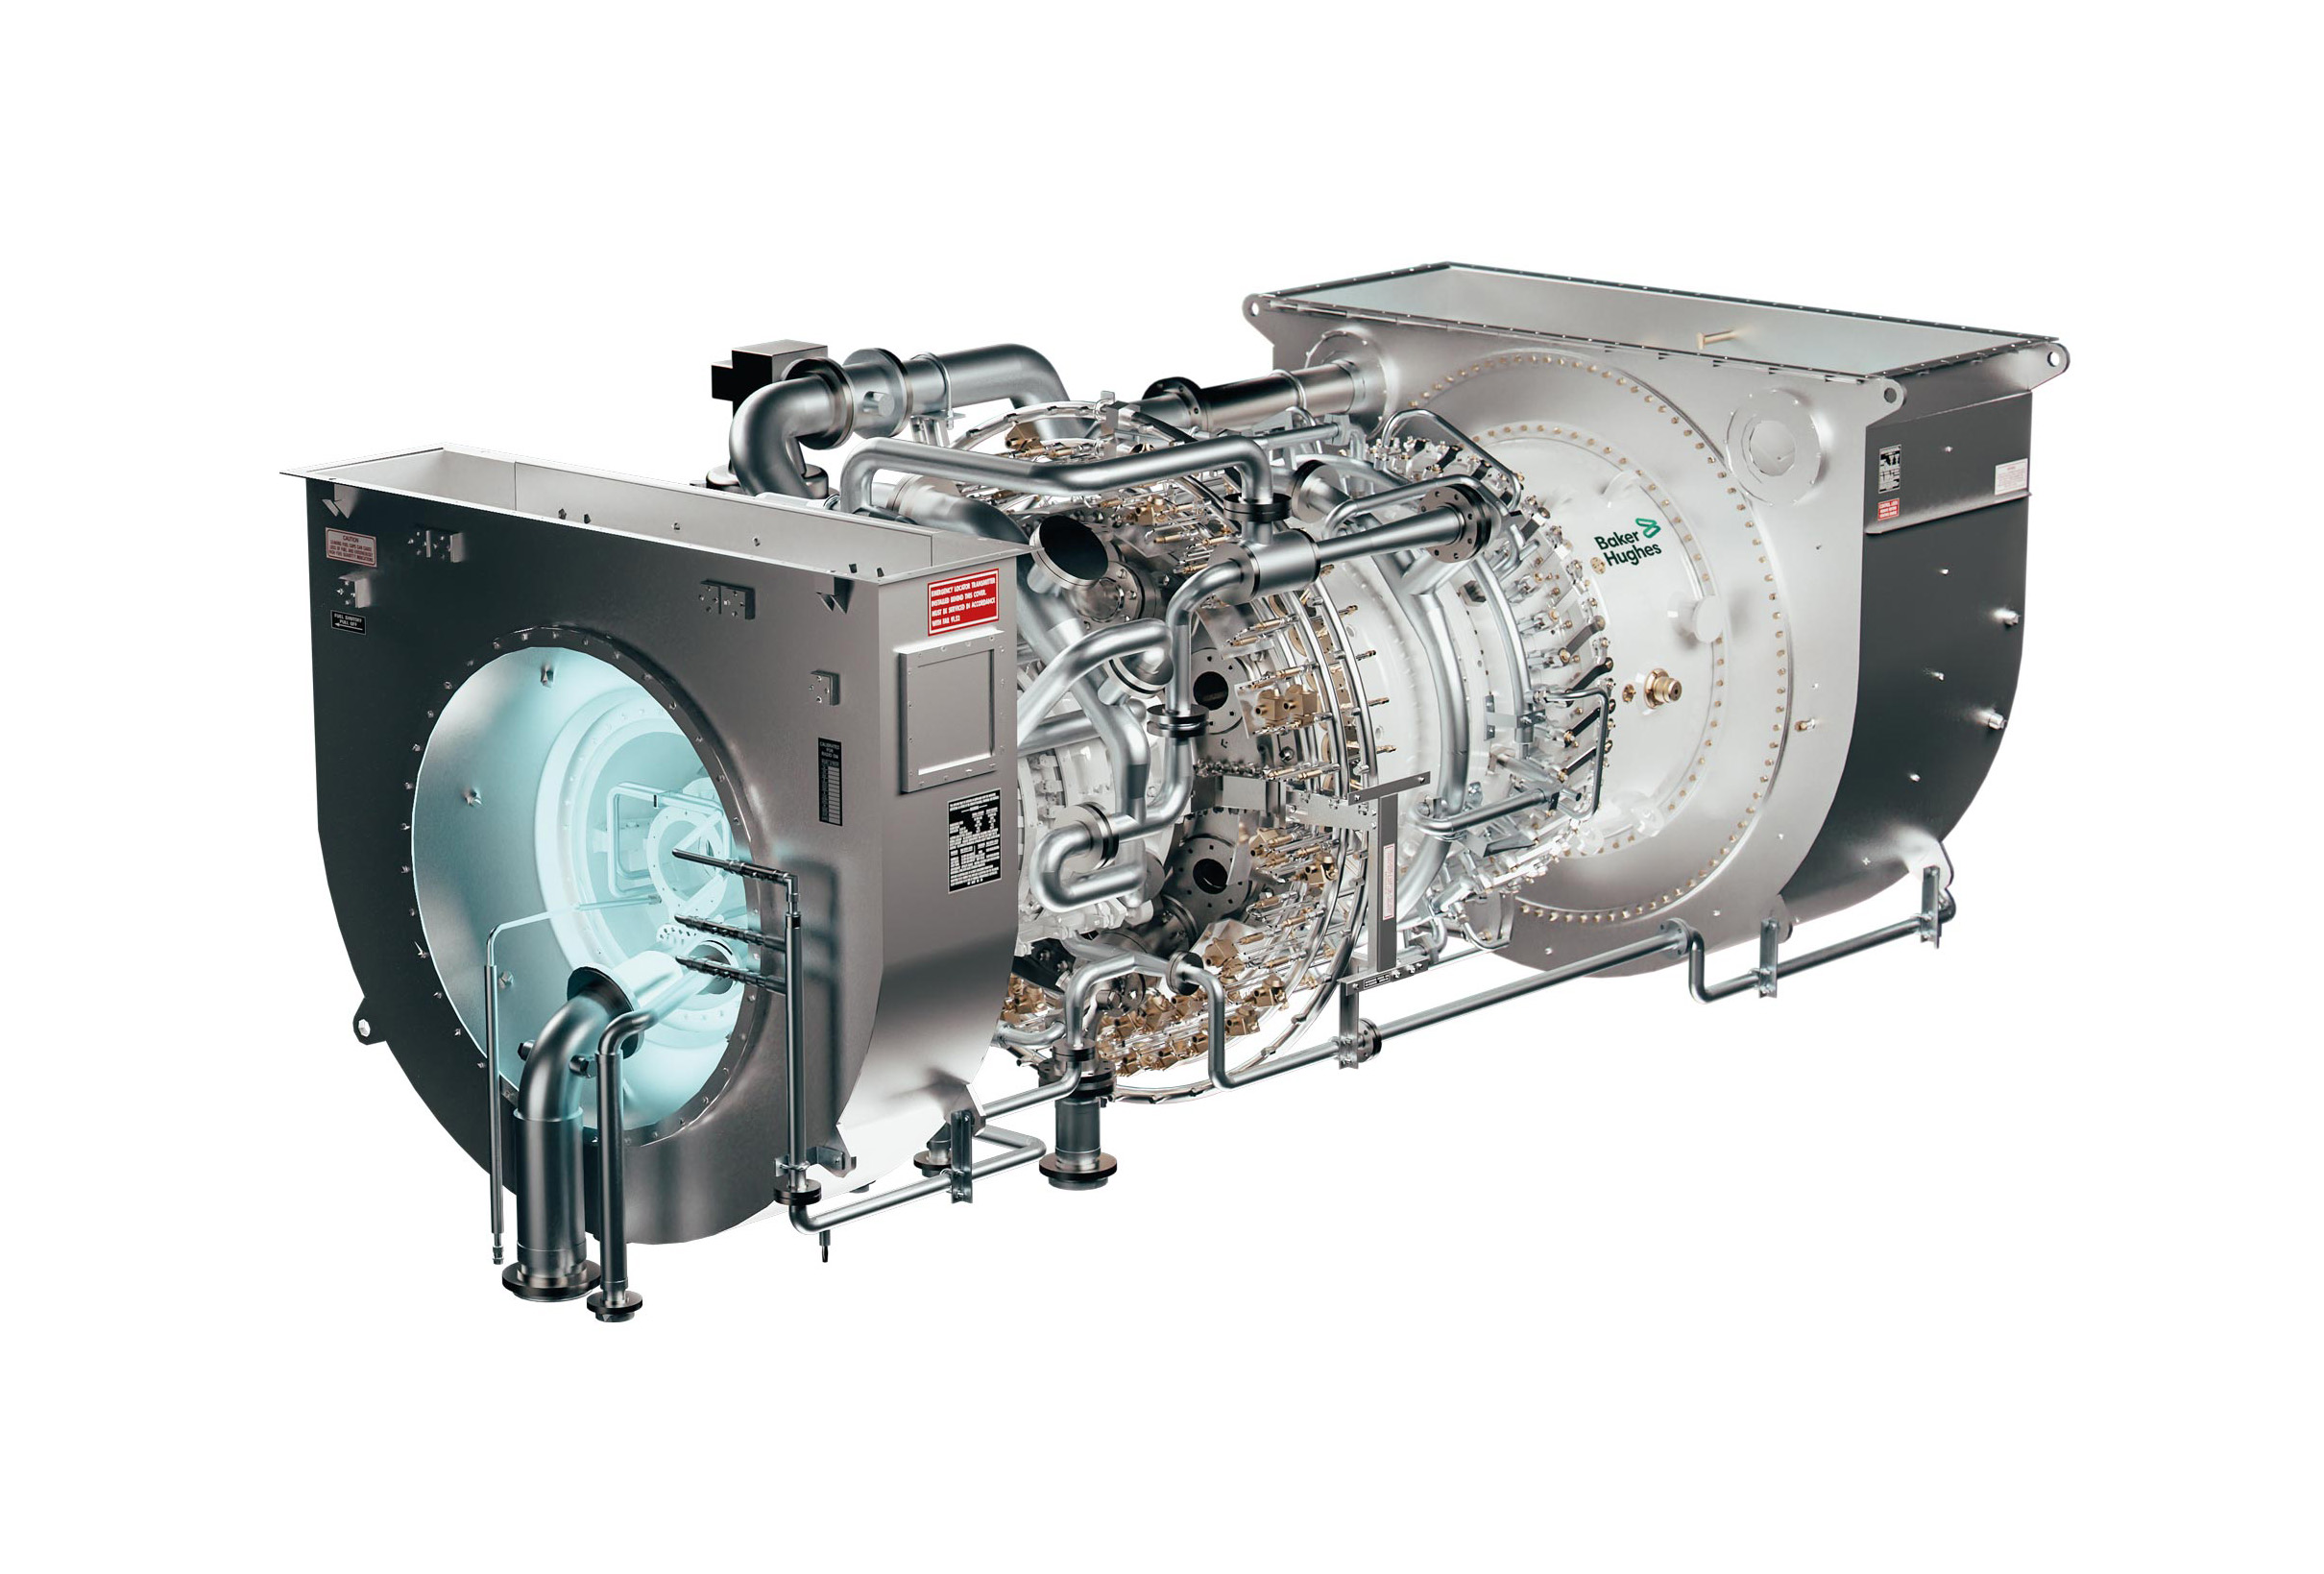 NovaLT 16 Hydrogen-Ready Turbine Engine